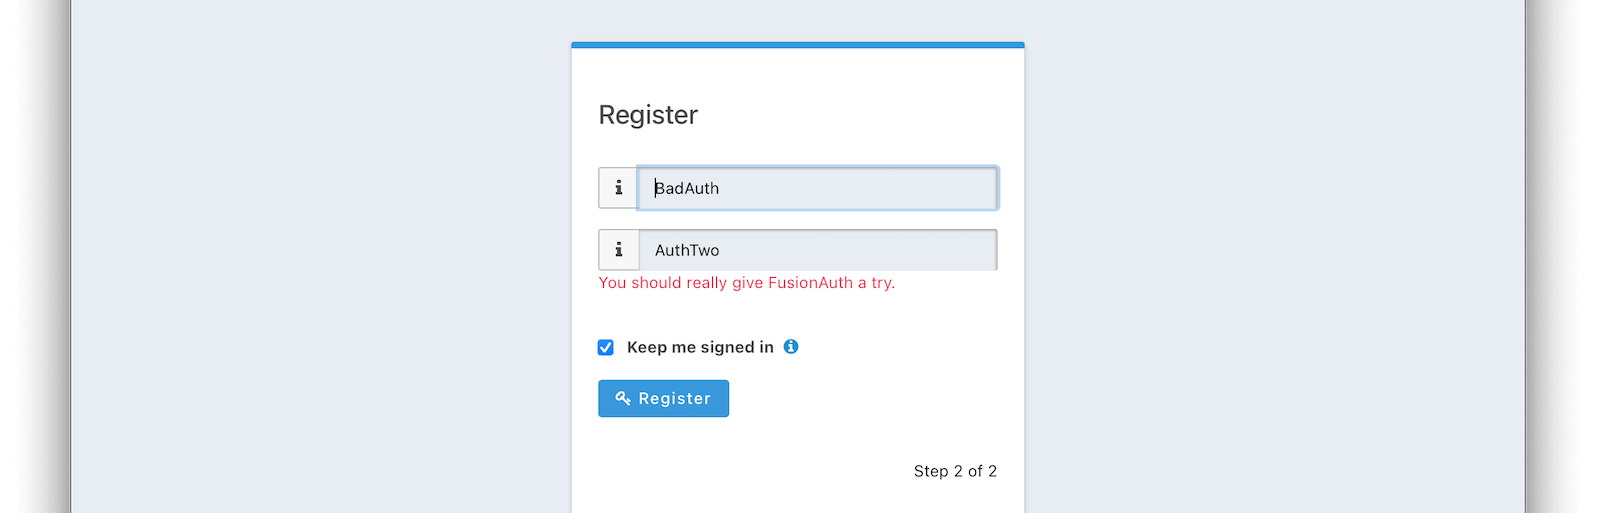 Self-Service registration example invalid form step